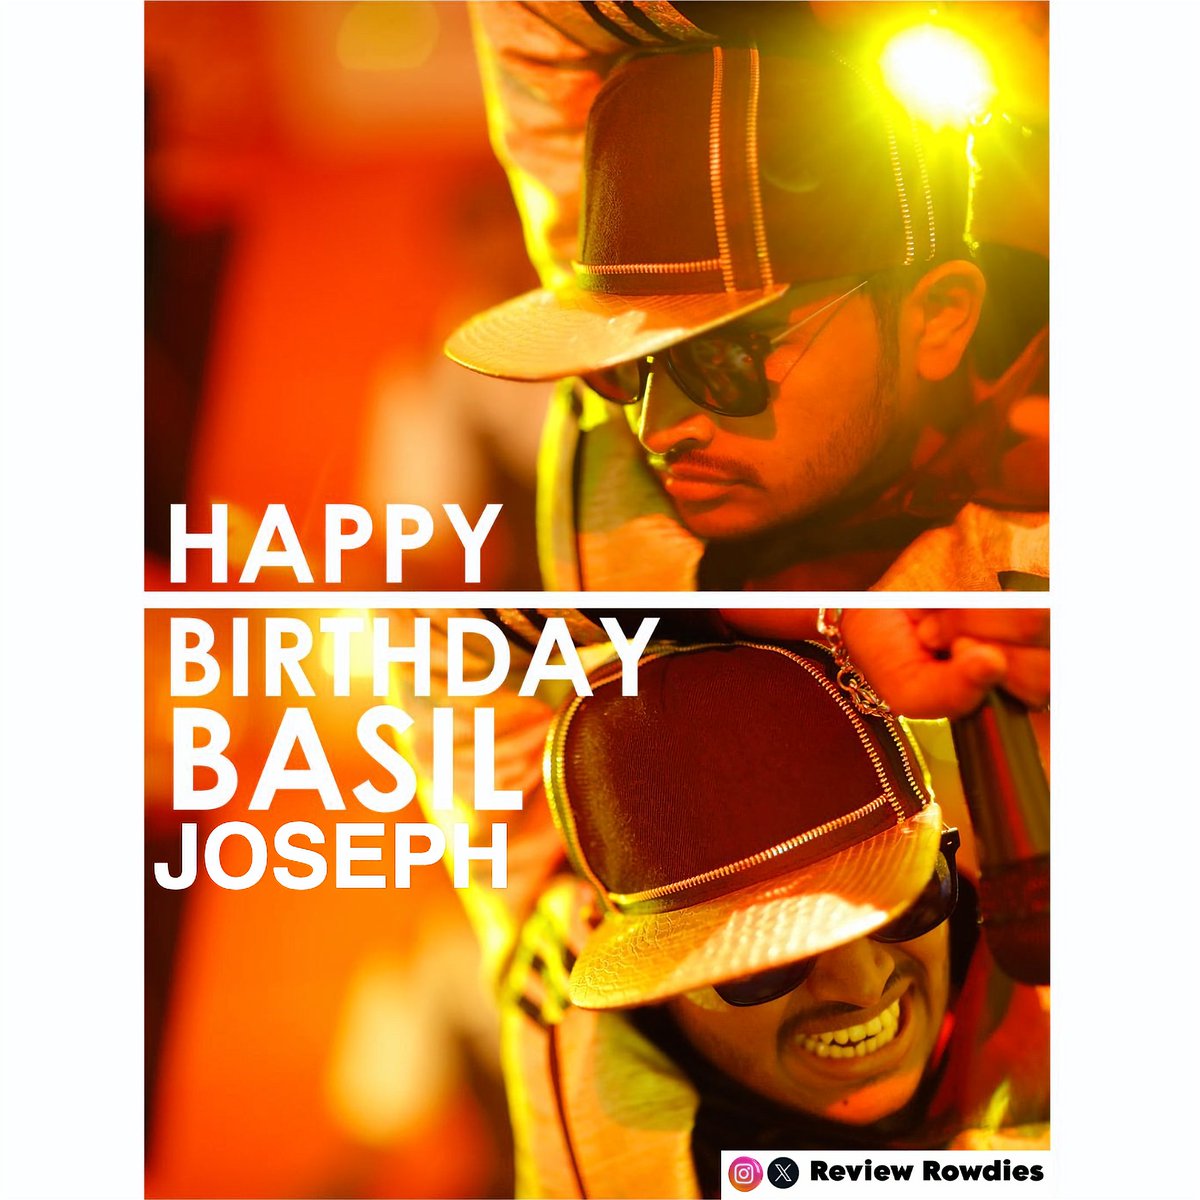 Birthday Wishes to  @basiljoseph25 

All the best for #GuruvayoorAmbalaNadayil and other upcoming projects 👍

#BasilJoseph
#HappyBirthdayBasilJoseph
#HBDBasilJoseph #Reviewrowdies